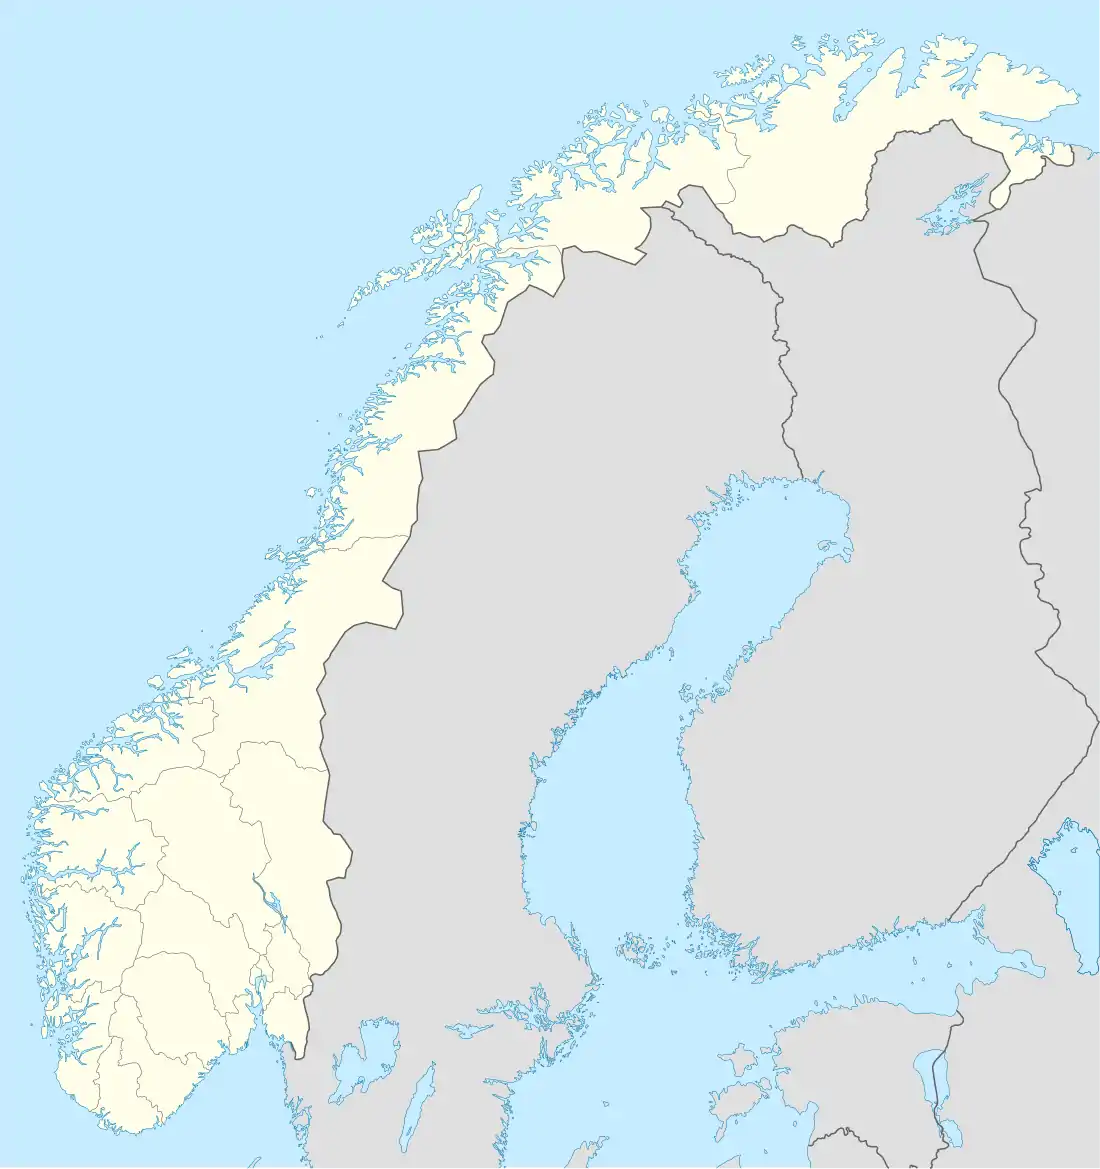 Vik is located in Norway